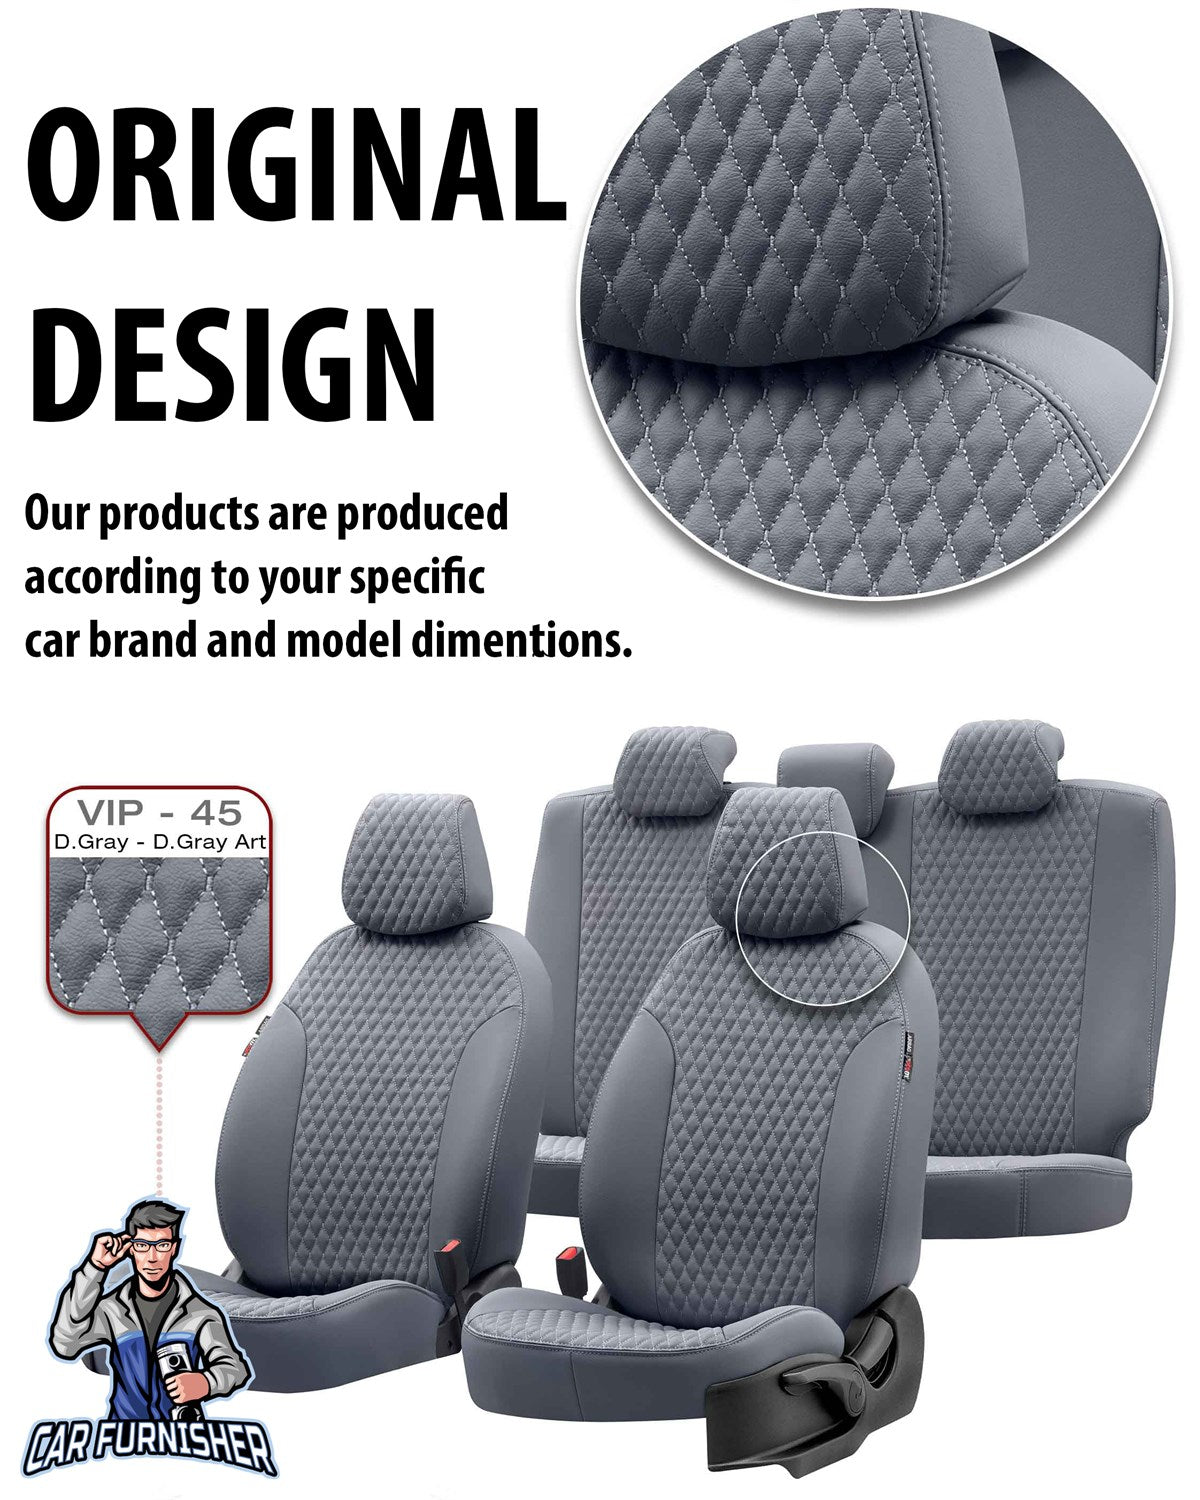 Isuzu D-Max Seat Covers Amsterdam Leather Design Dark Gray Leather